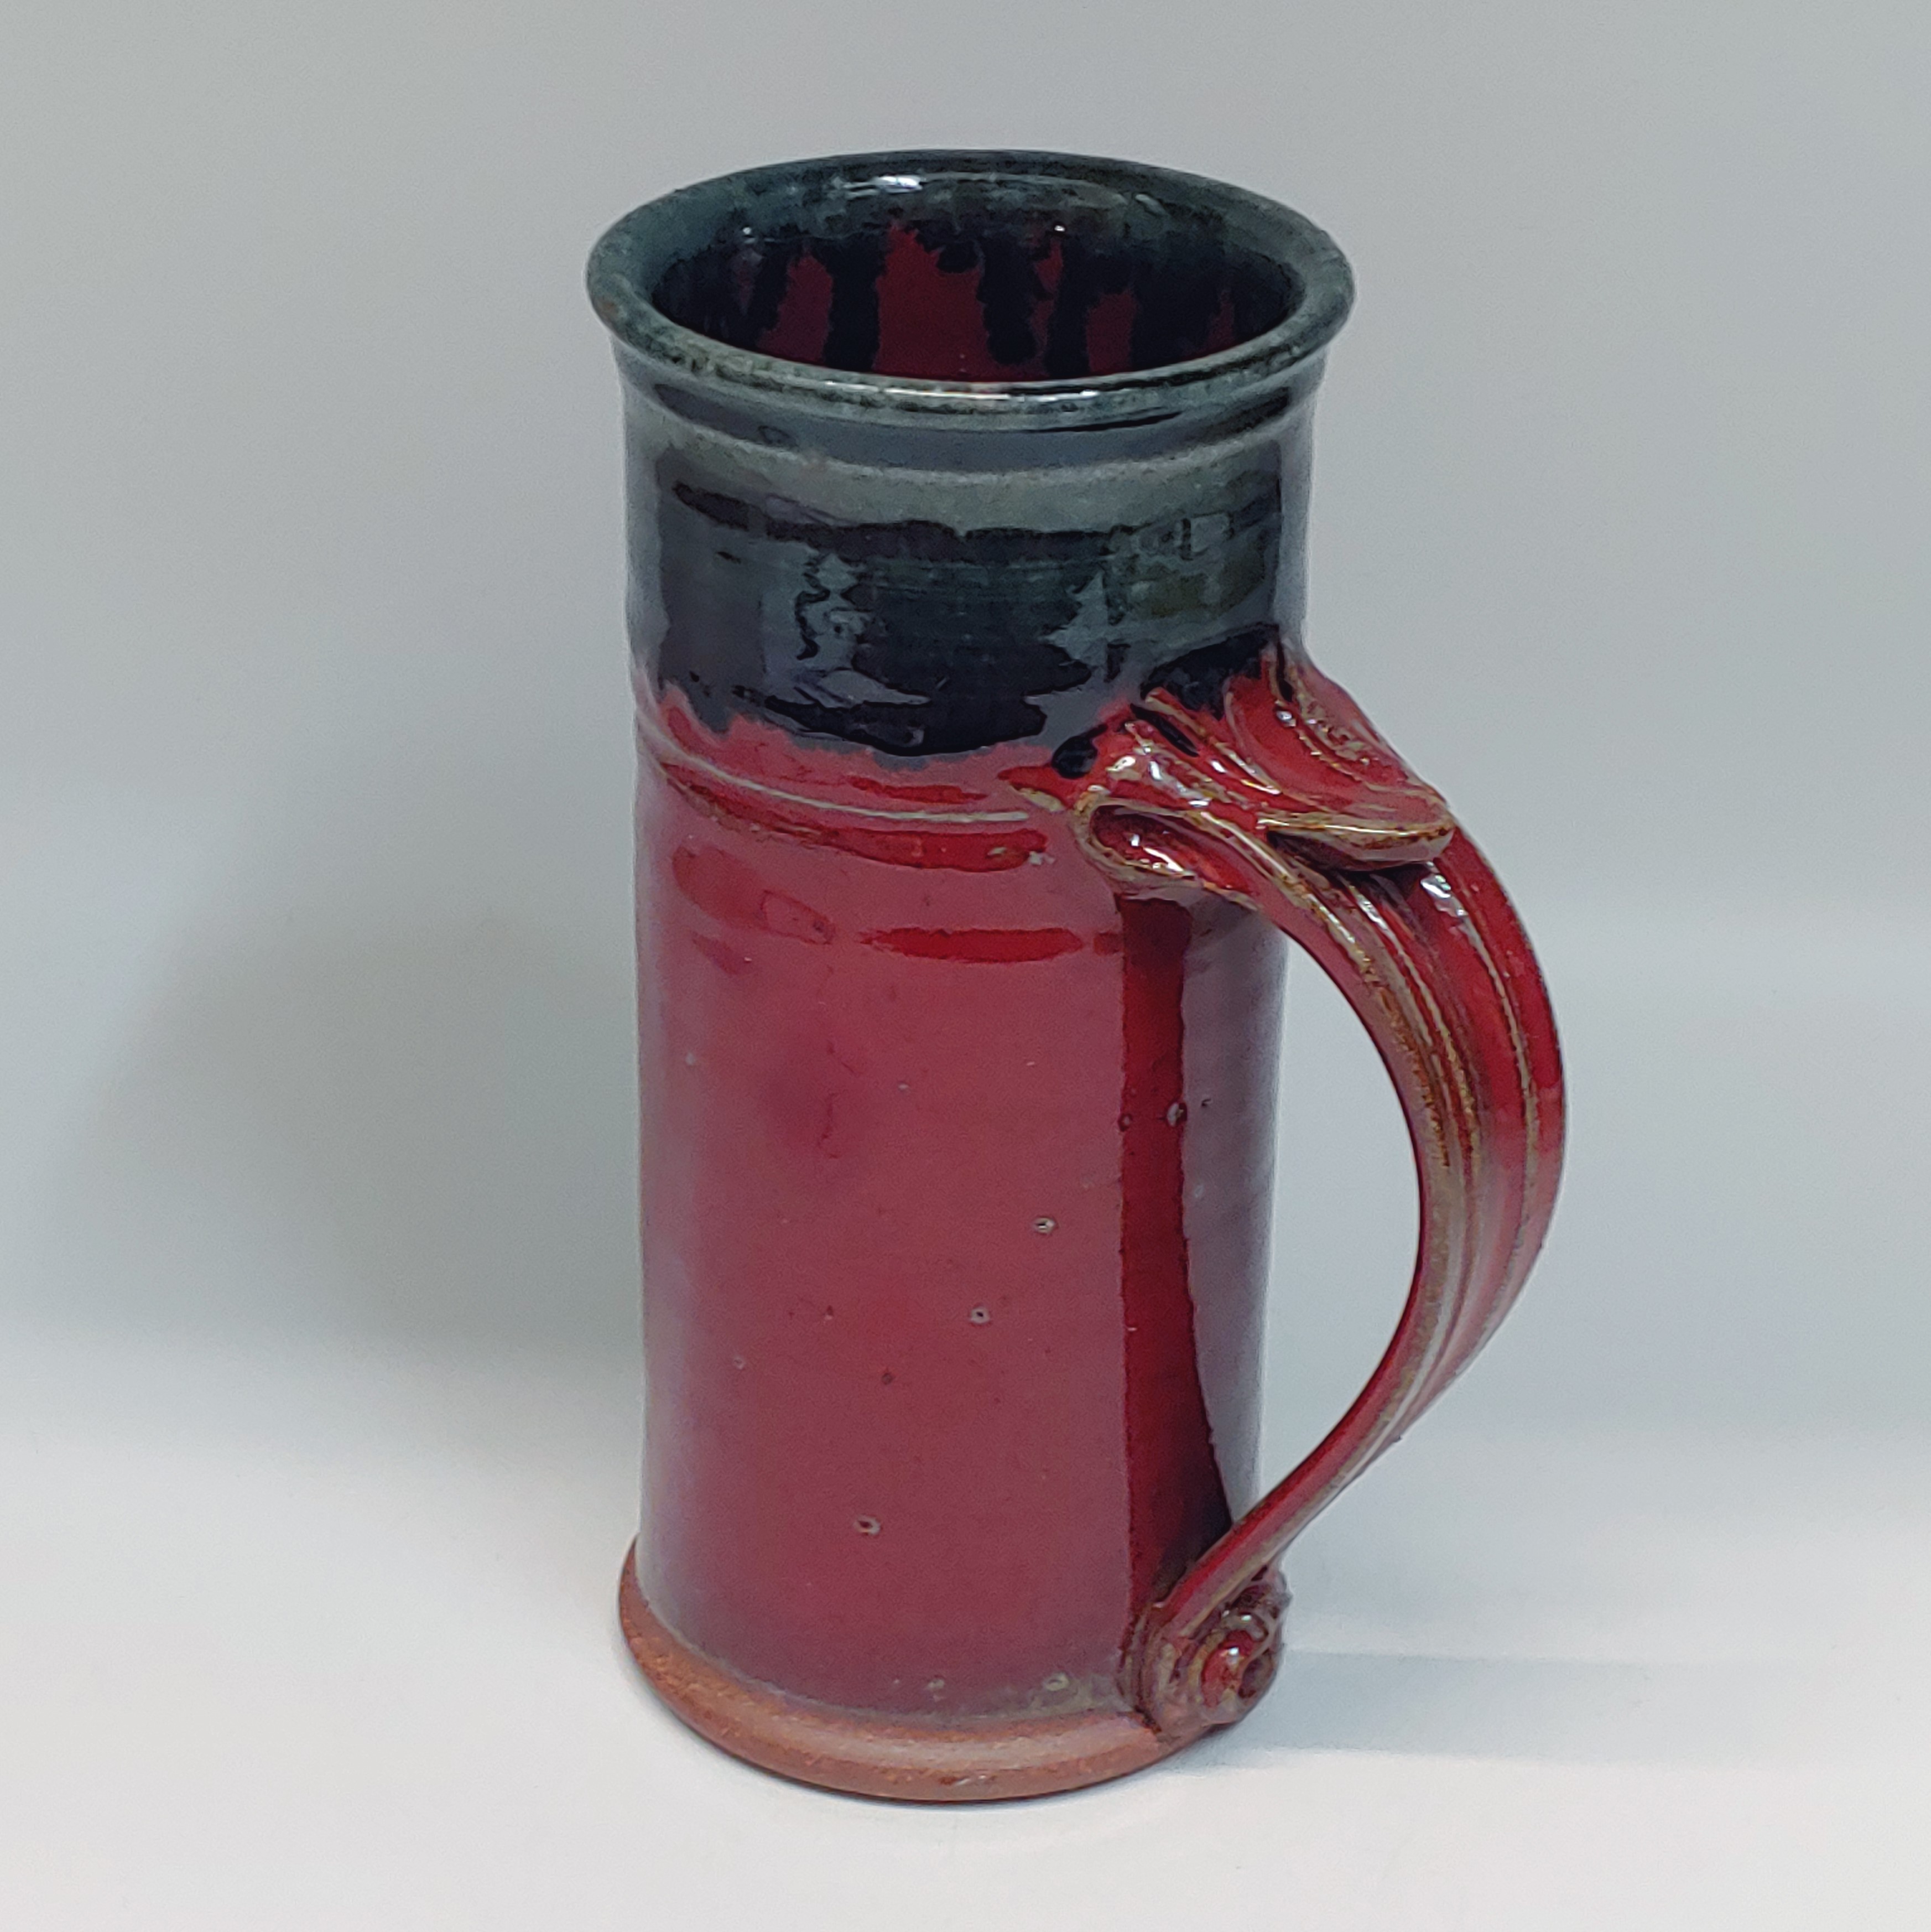 #220242 Mug, Beer Stein, Red/Black $22 at Hunter Wolff Gallery